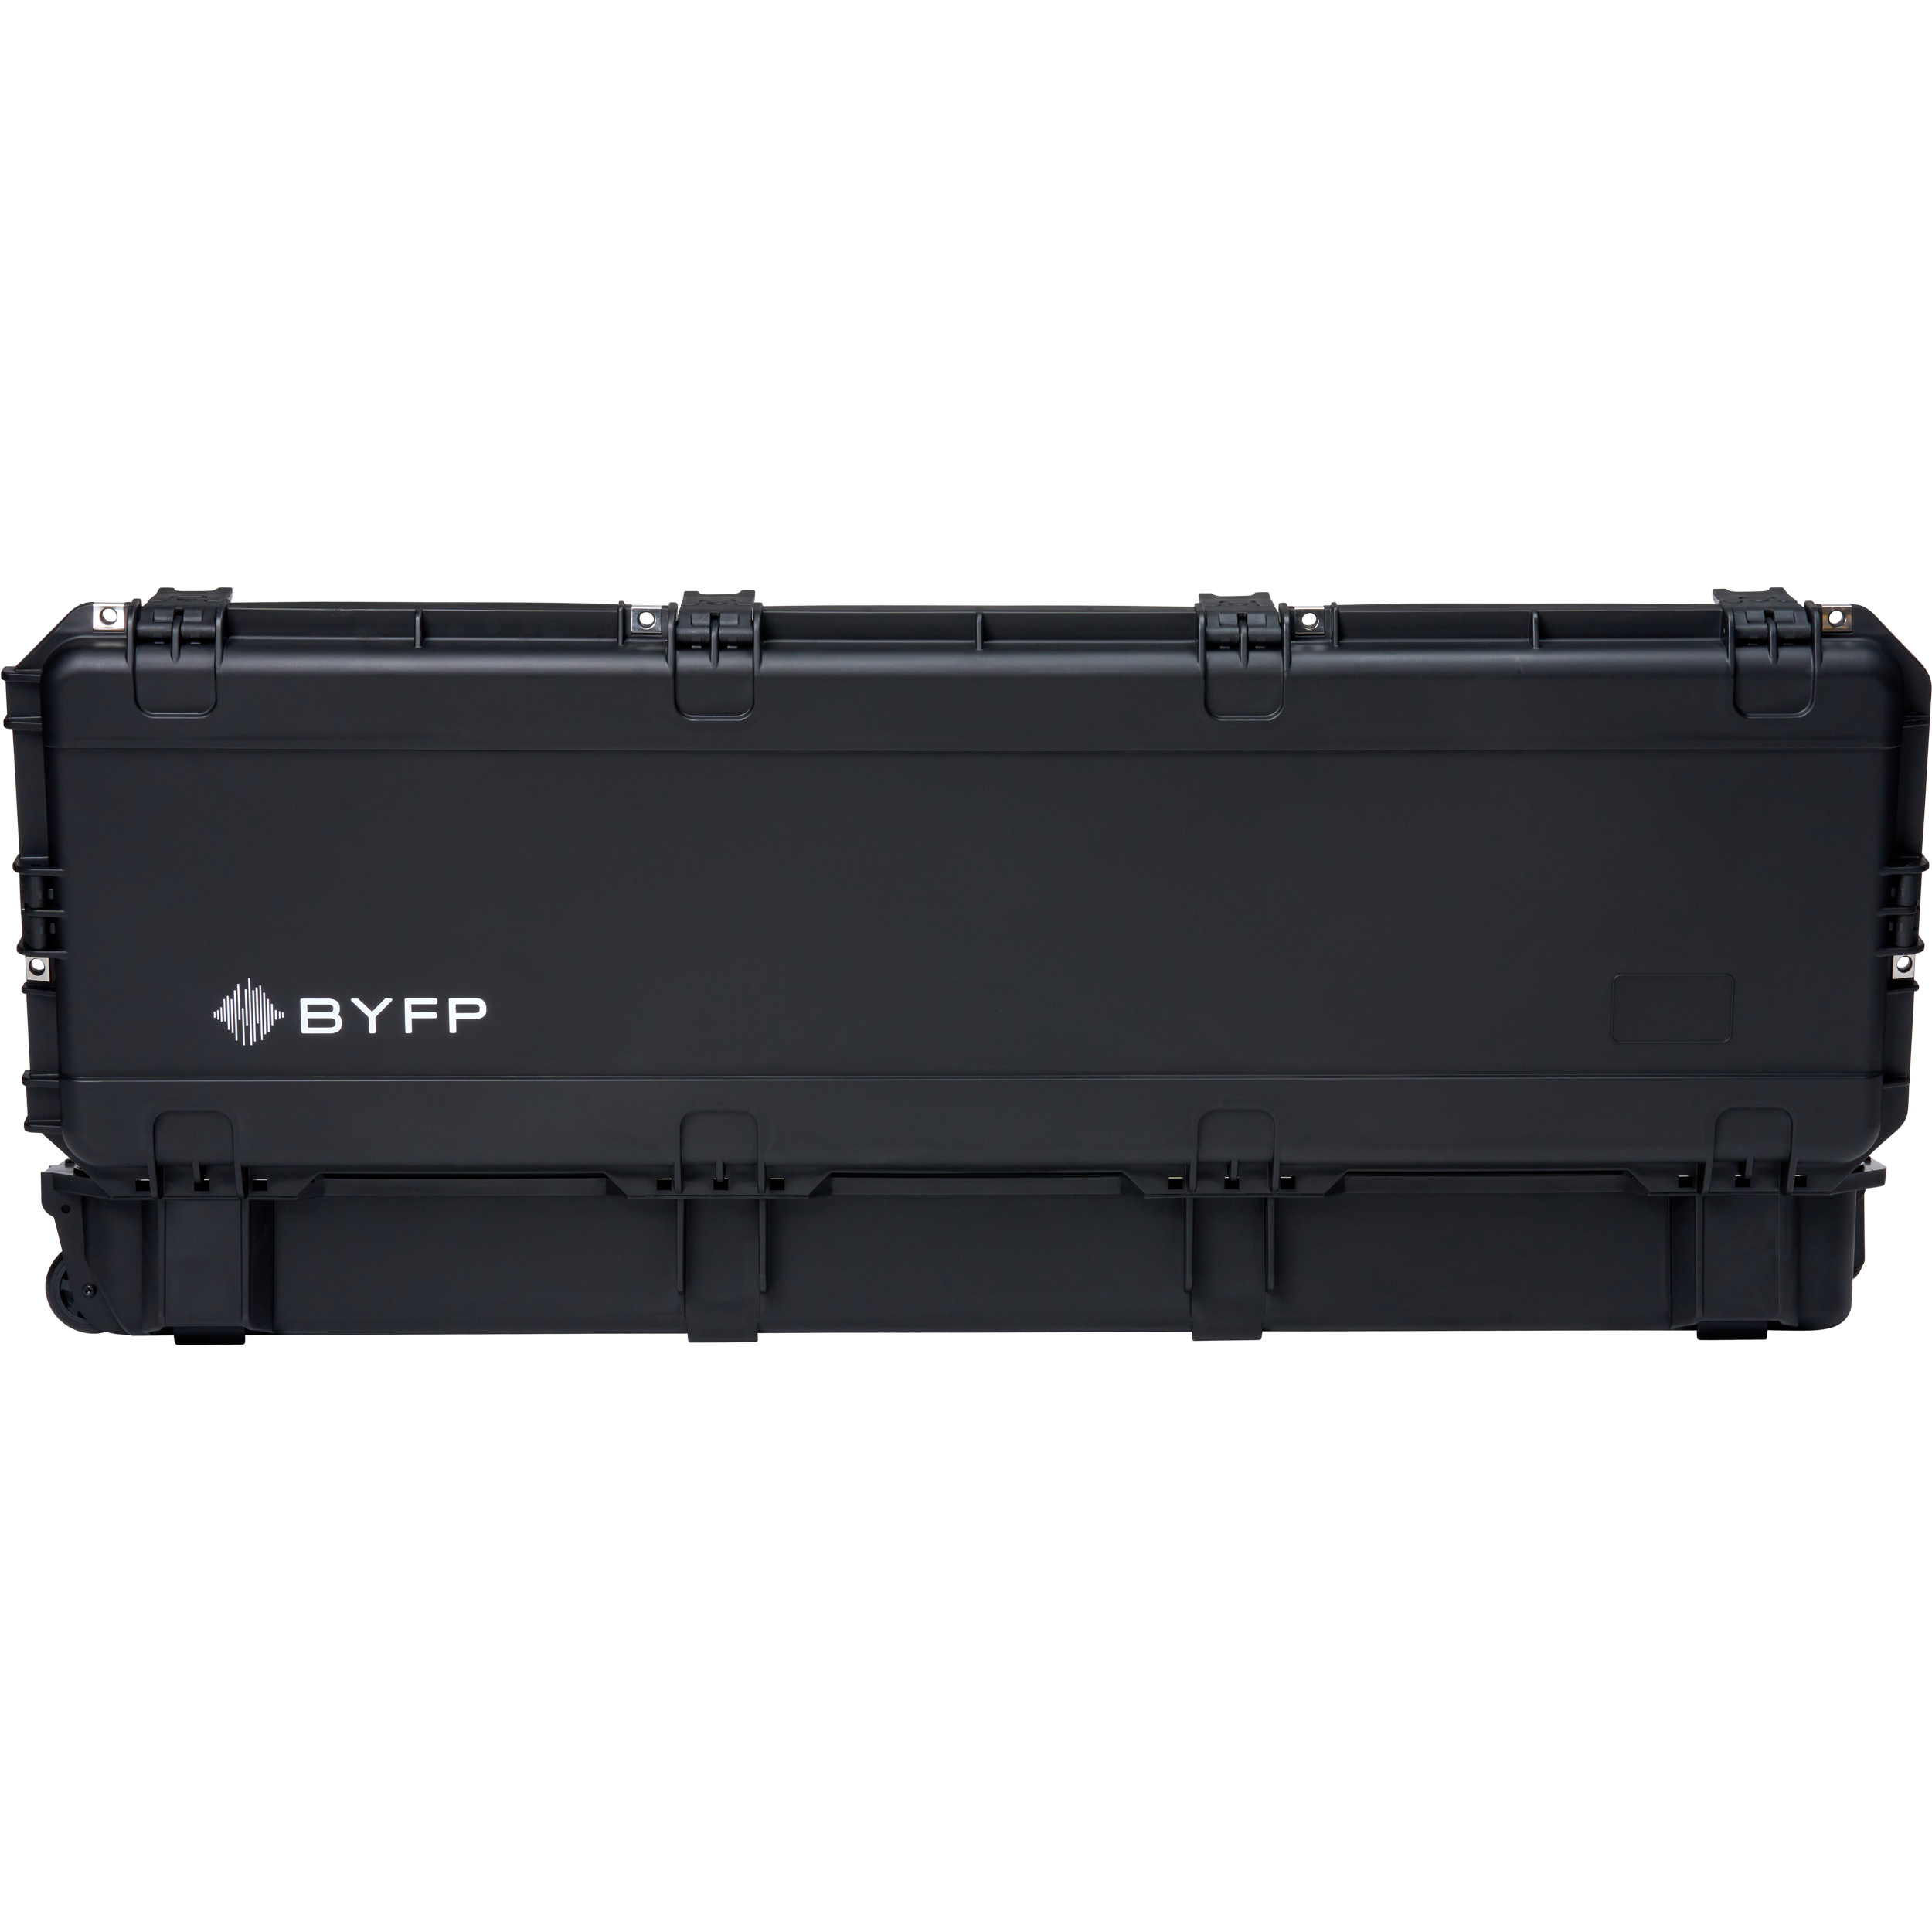 BYFP ipCase for Obsidian NX1 + NXK + NXP Lighting Controller